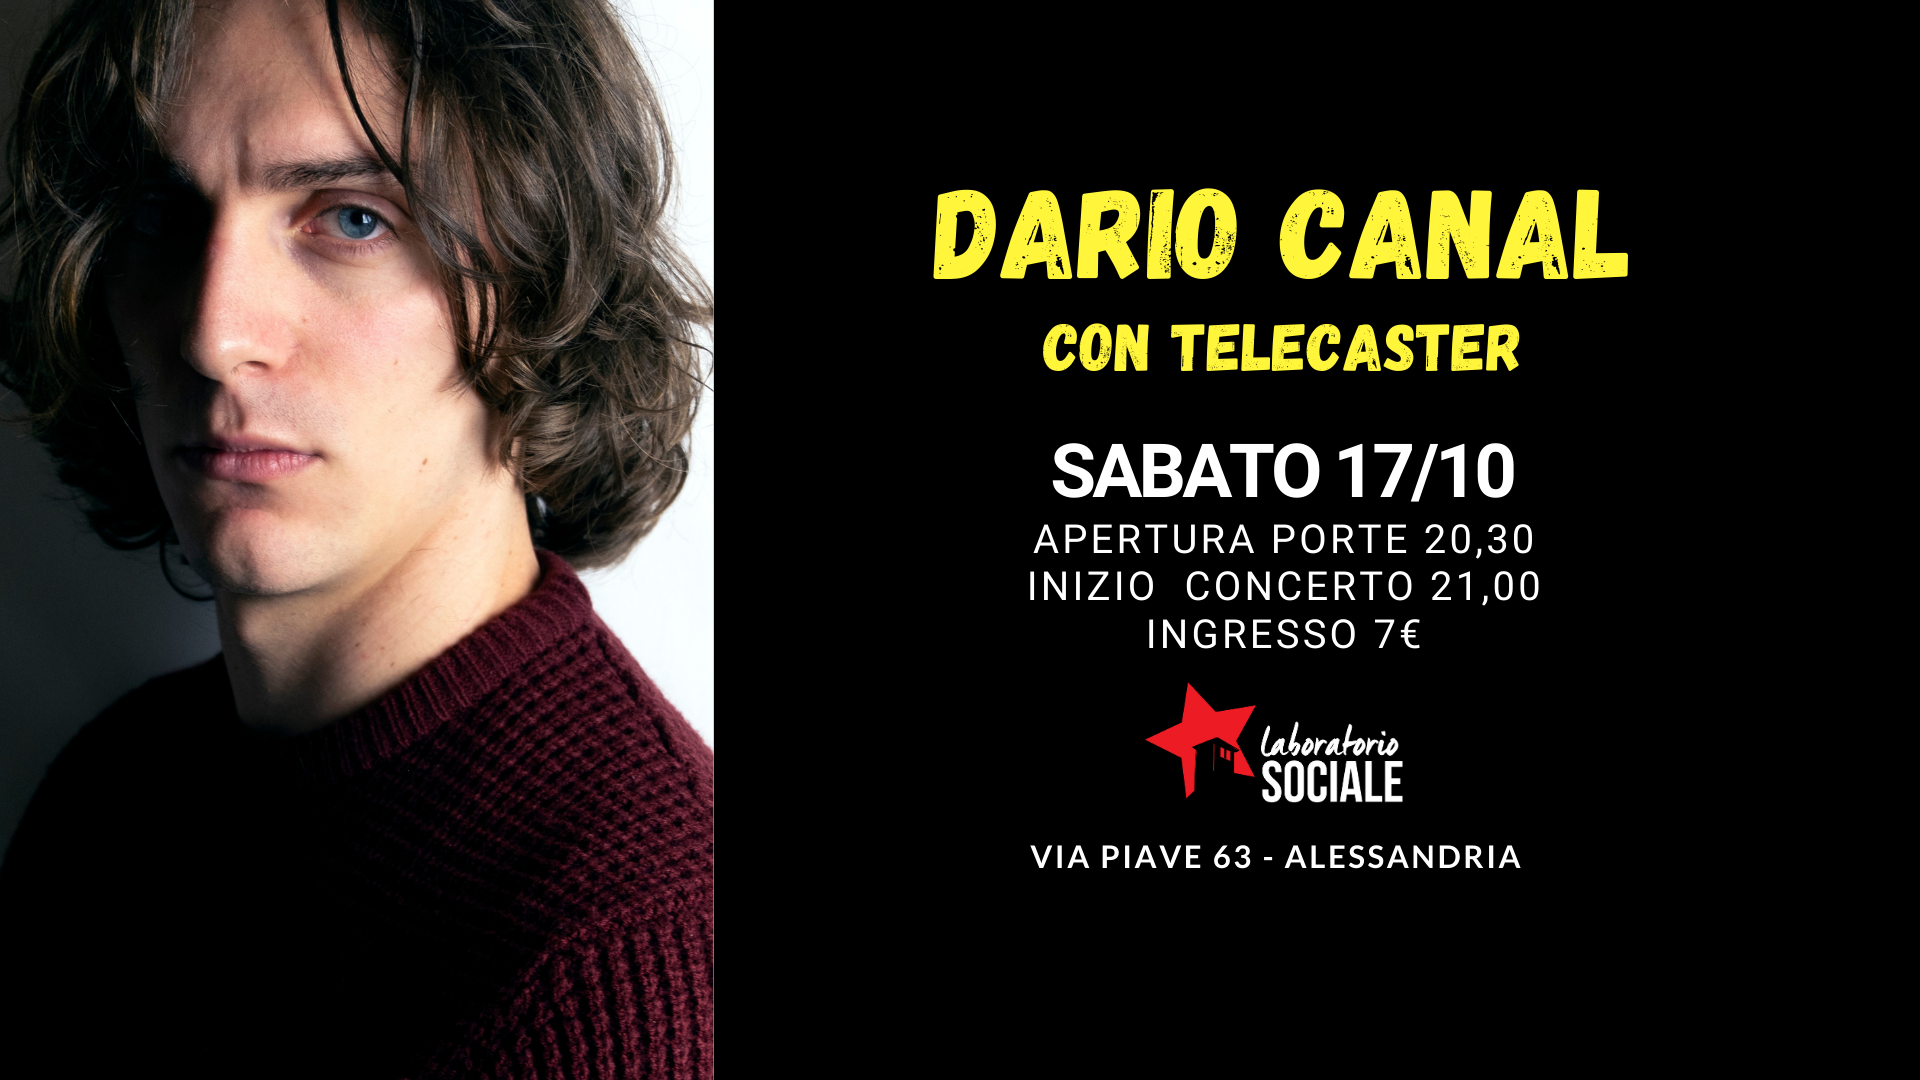 Sabato 17 ottobre, Dario Canal e la sua Telecaster